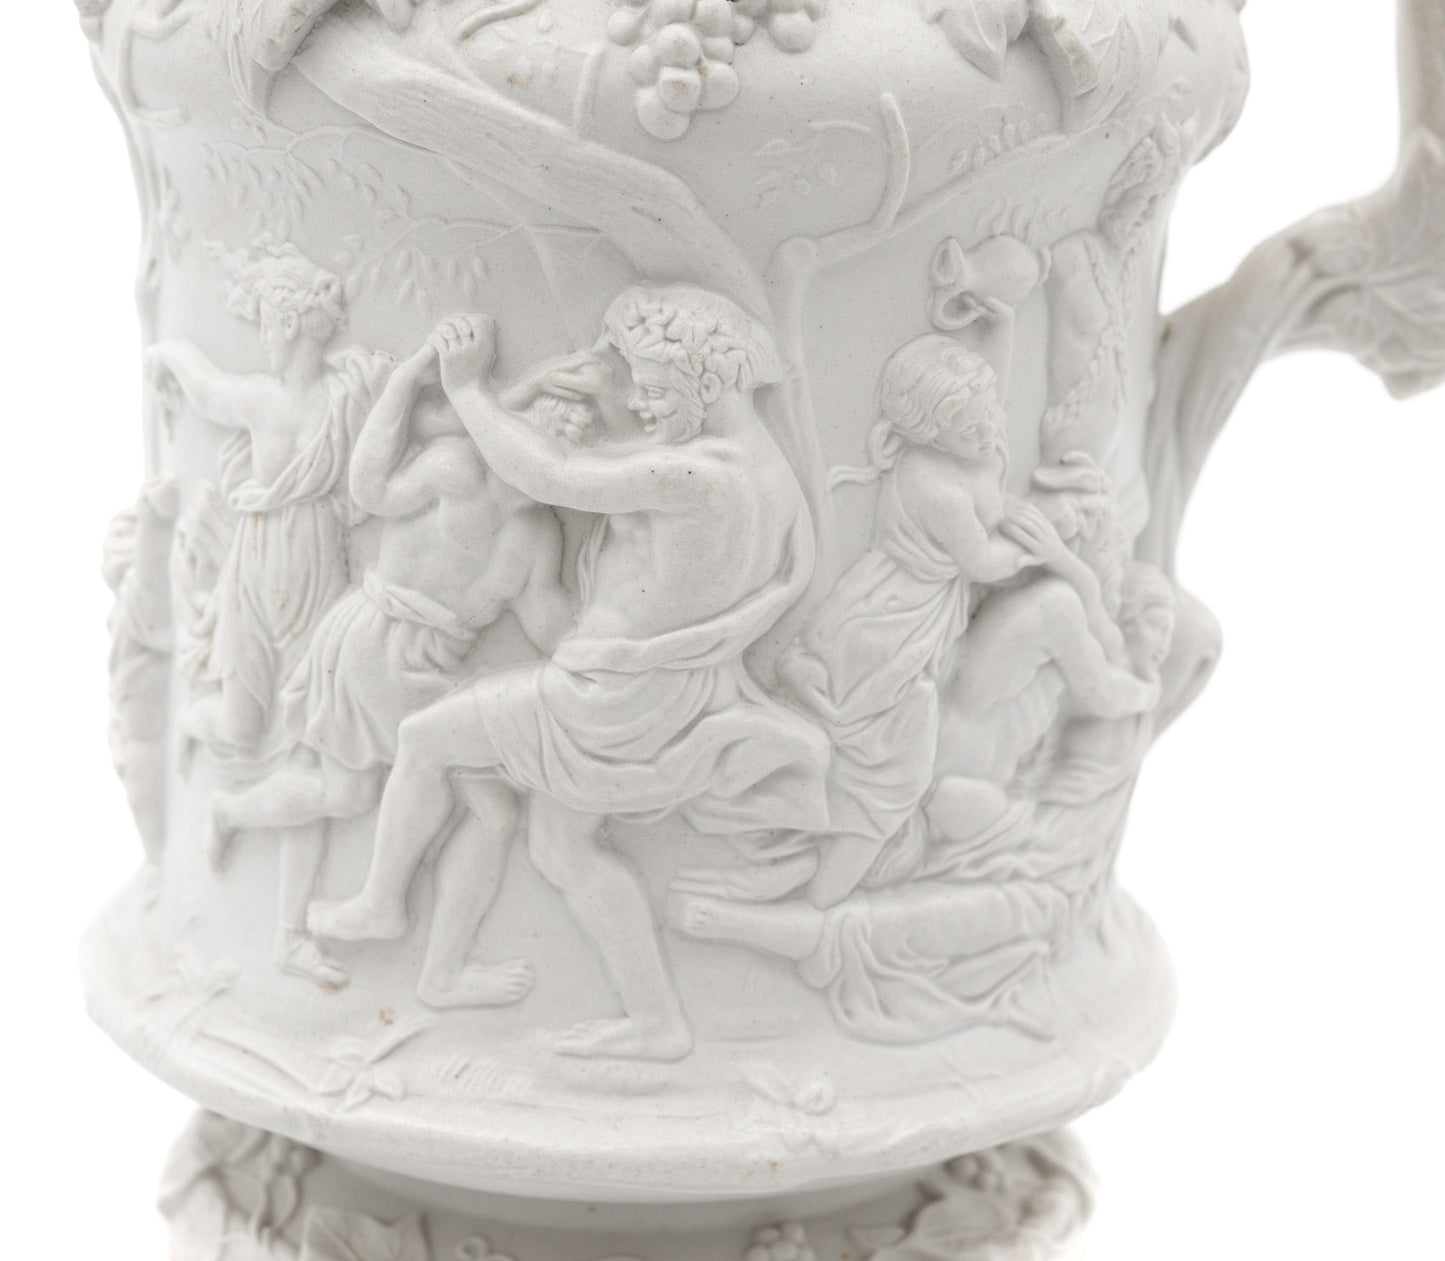 Antique Charles Meigh Bacchanalian Dance / Rubens Stoneware Moulded Jug c1844 (Code 2449)